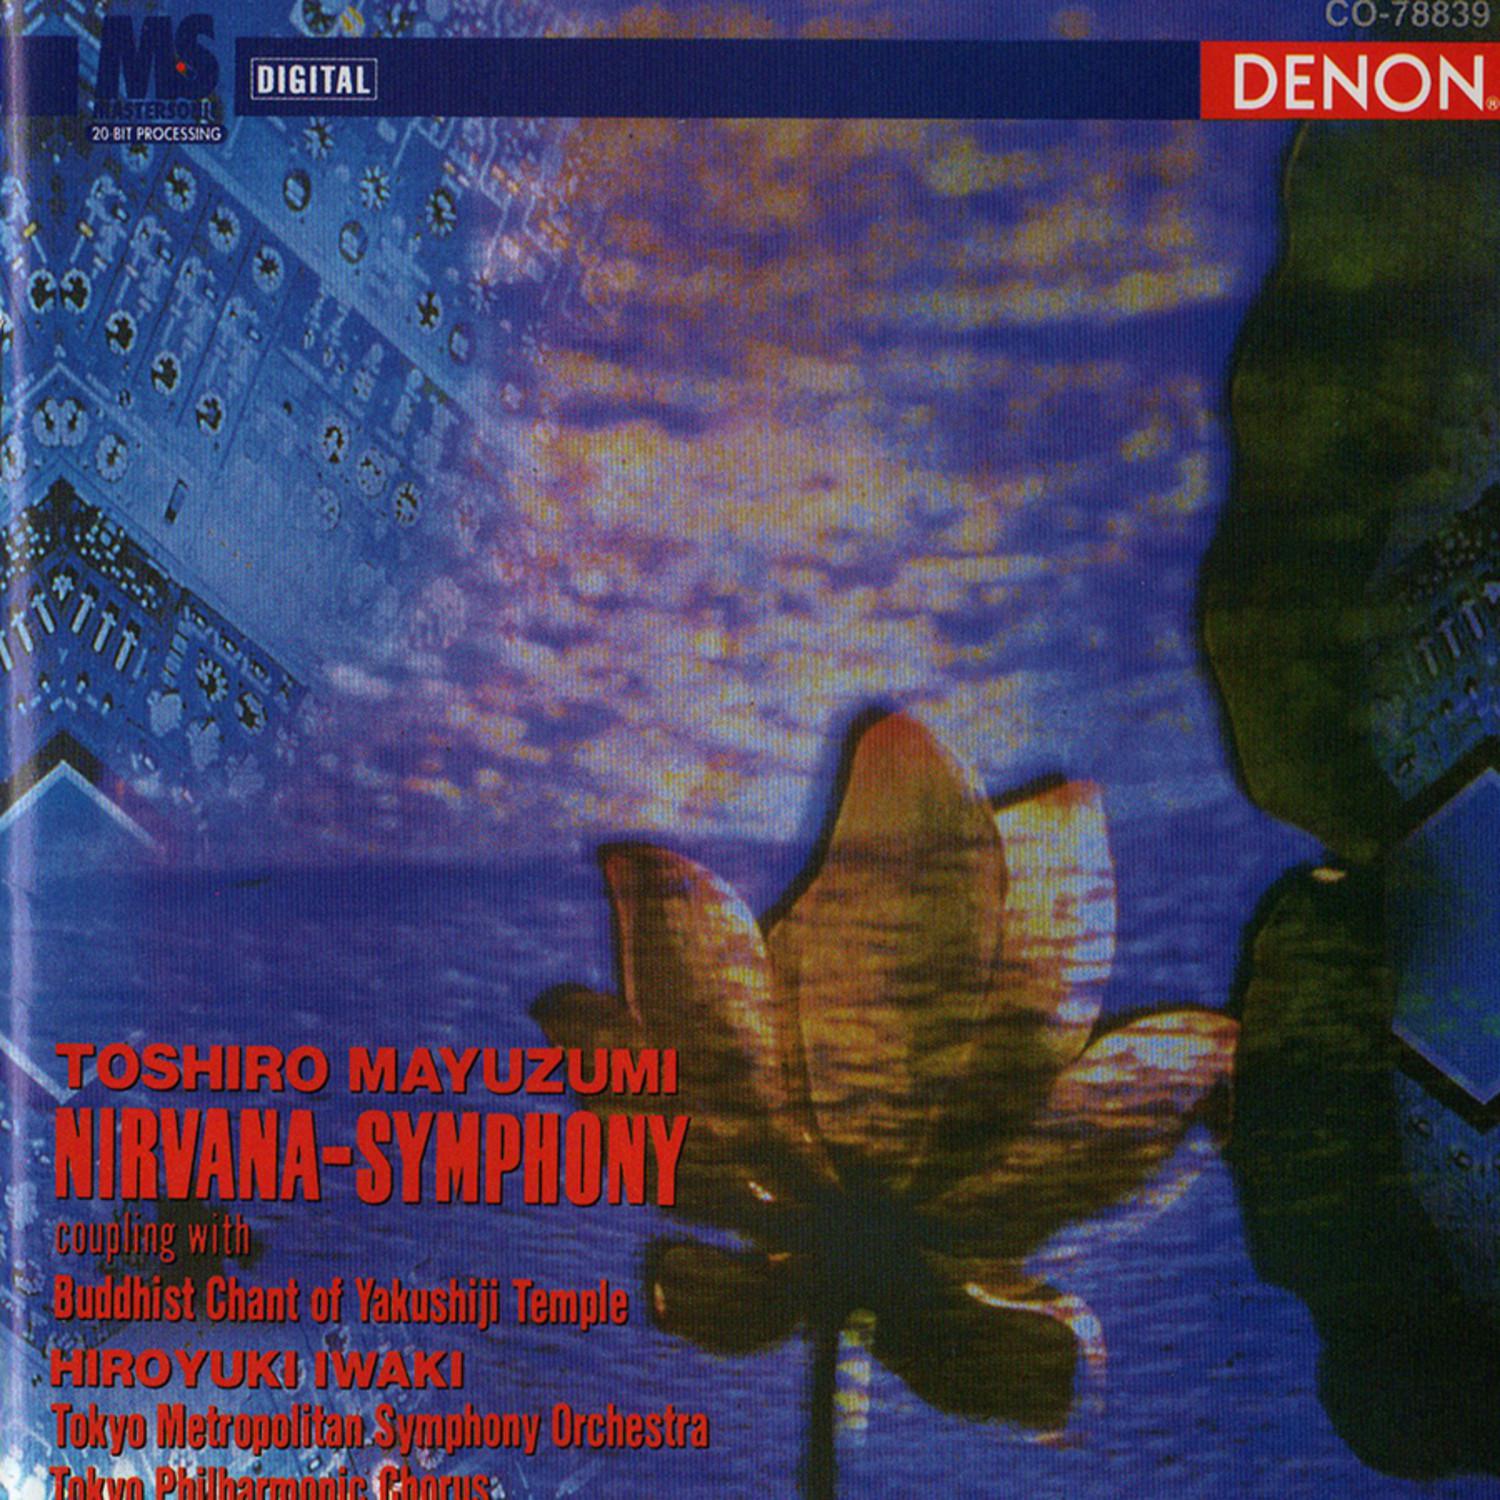 Nirvana-Symphony: I. Campanology I